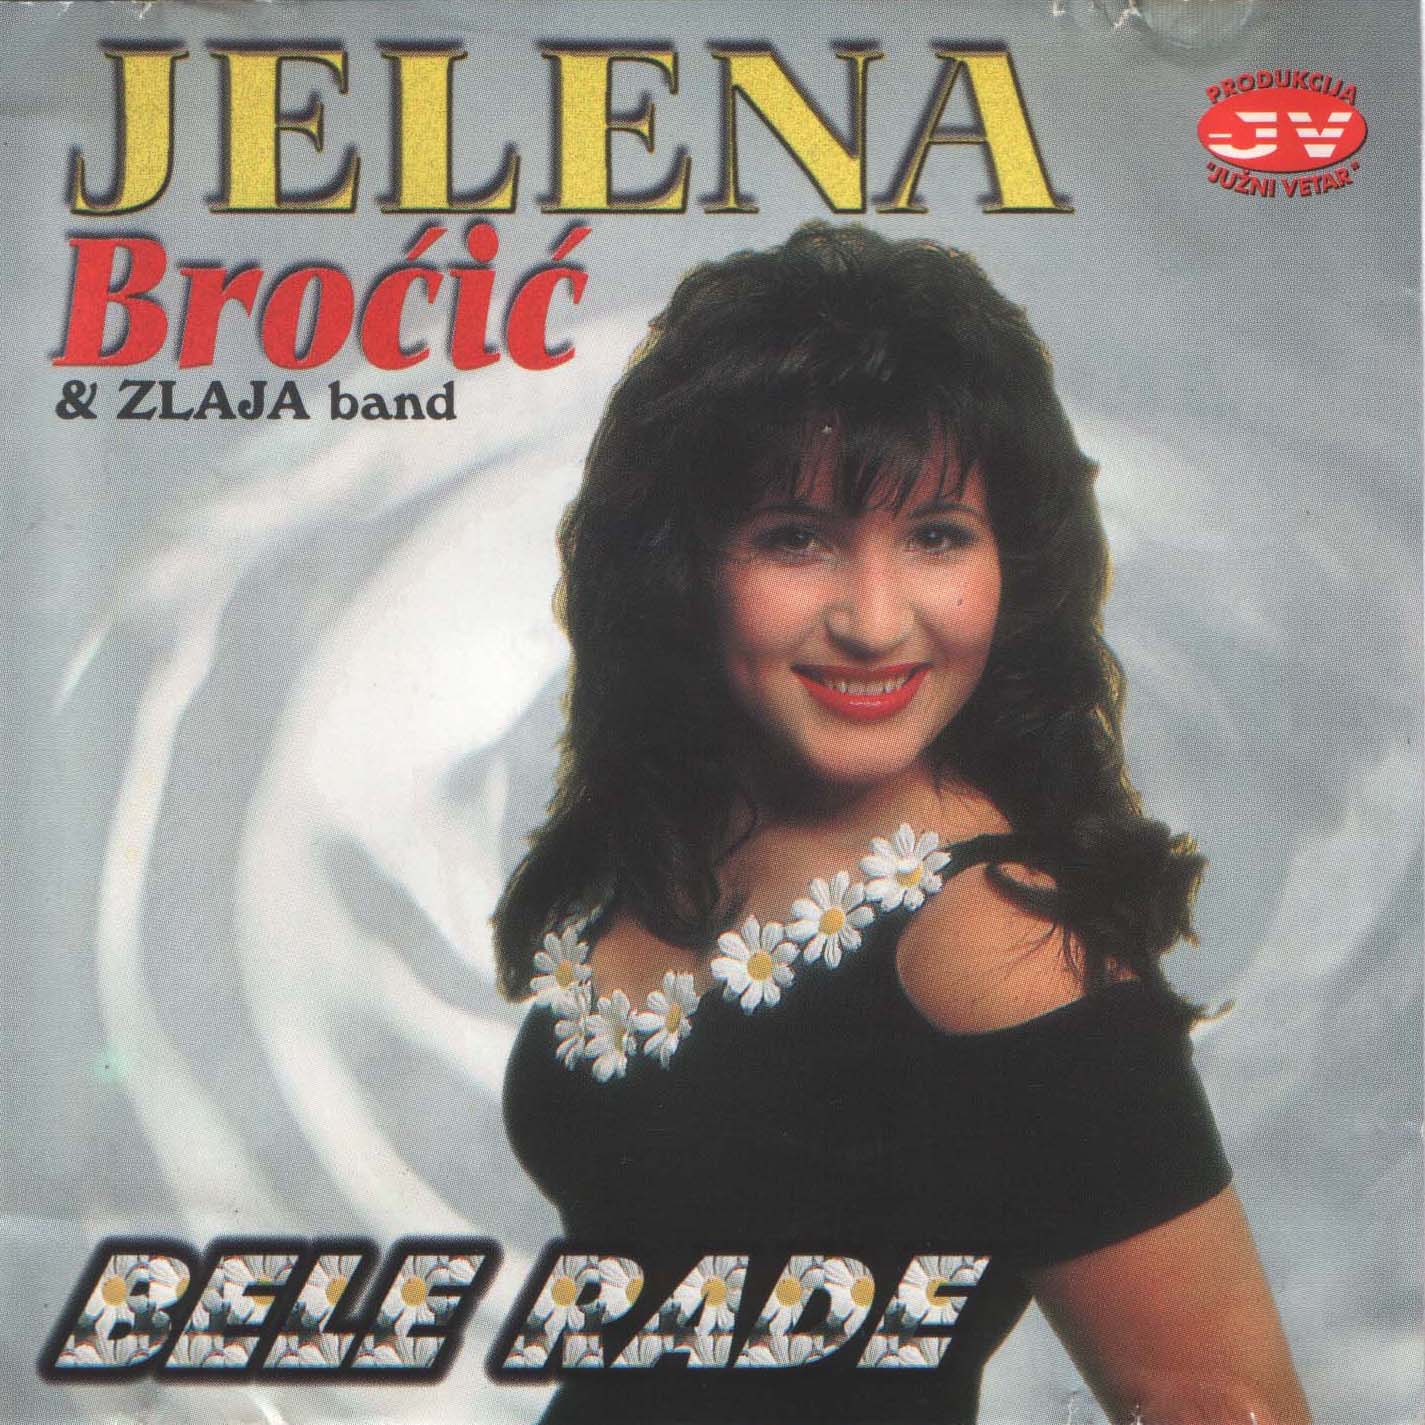 Jelena Brocic 1998 Prednja